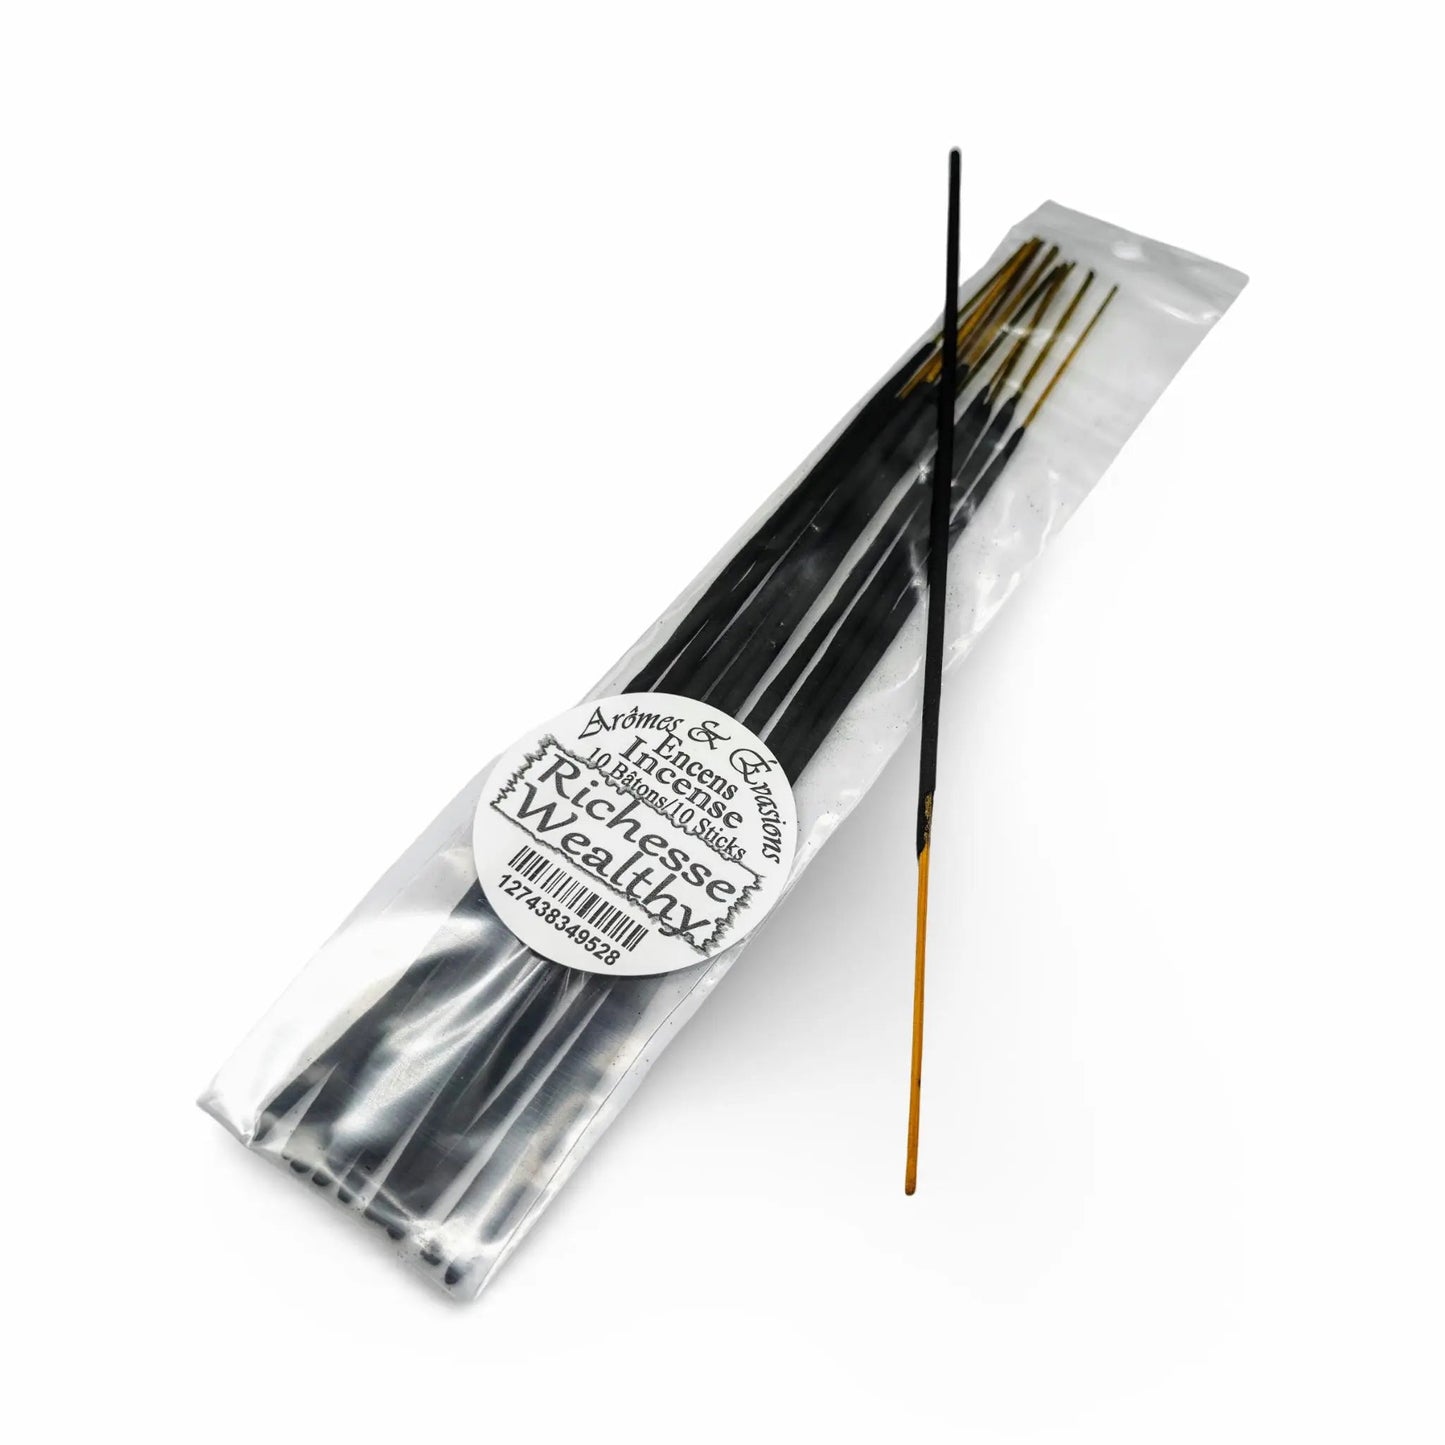 Incense Box -Wealthy -10 Sticks -Floral Scent -Aromes Evasions